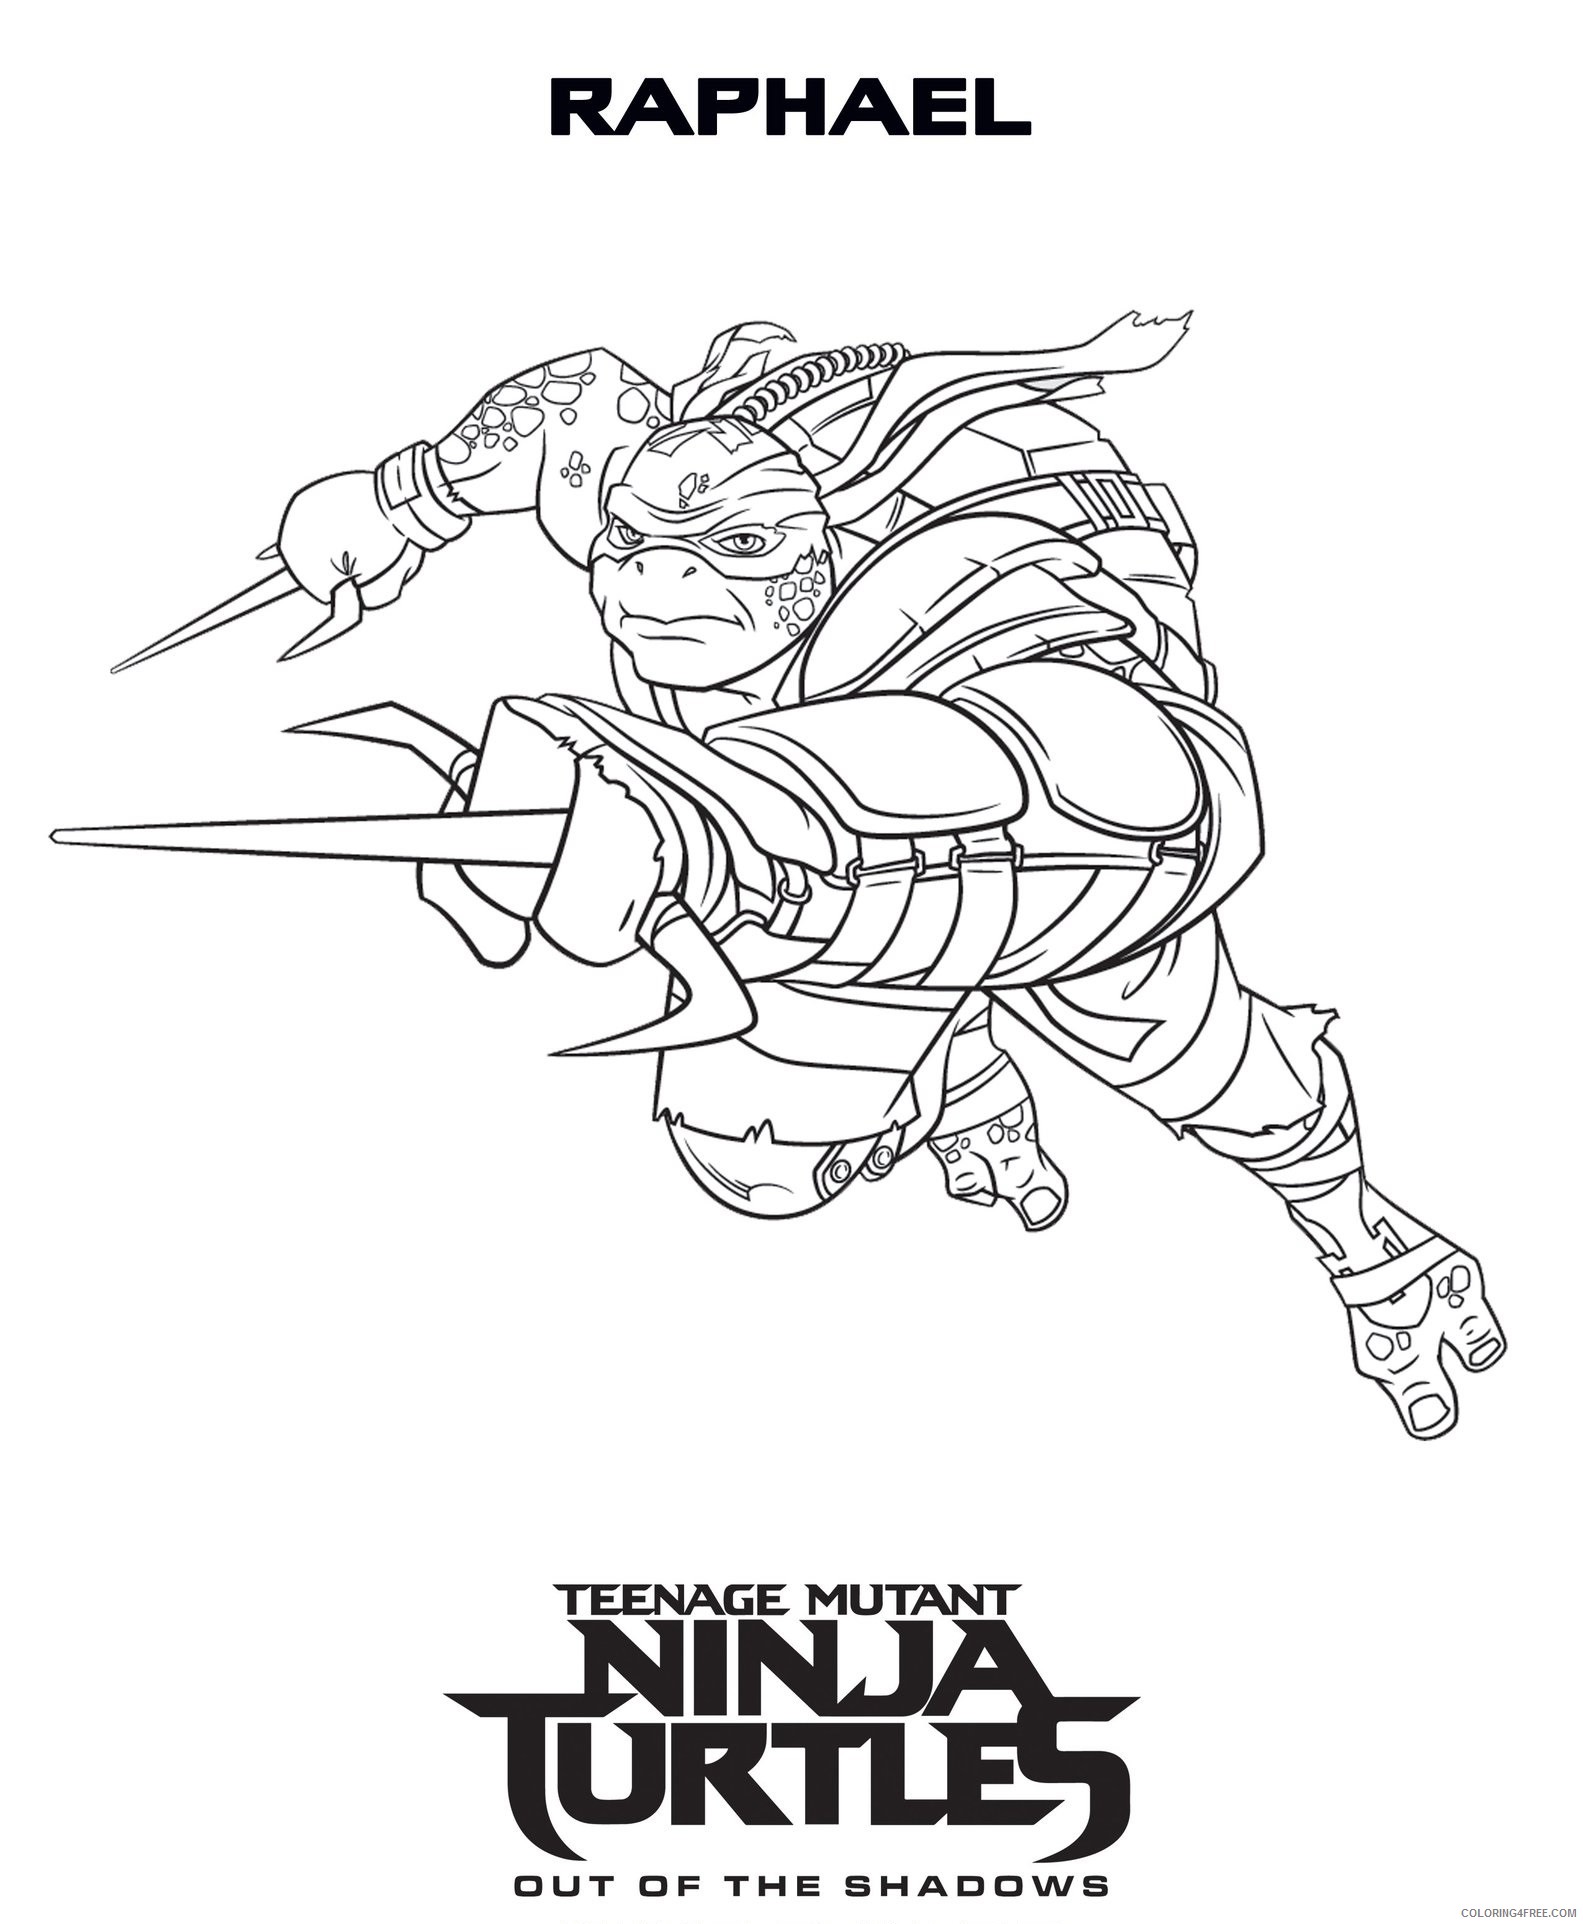 Teenage Mutant Ninja Turtles Coloring Pages Cartoons Raphael Teenage Mutant Ninja Turtles Printable 2020 6314 Coloring4free